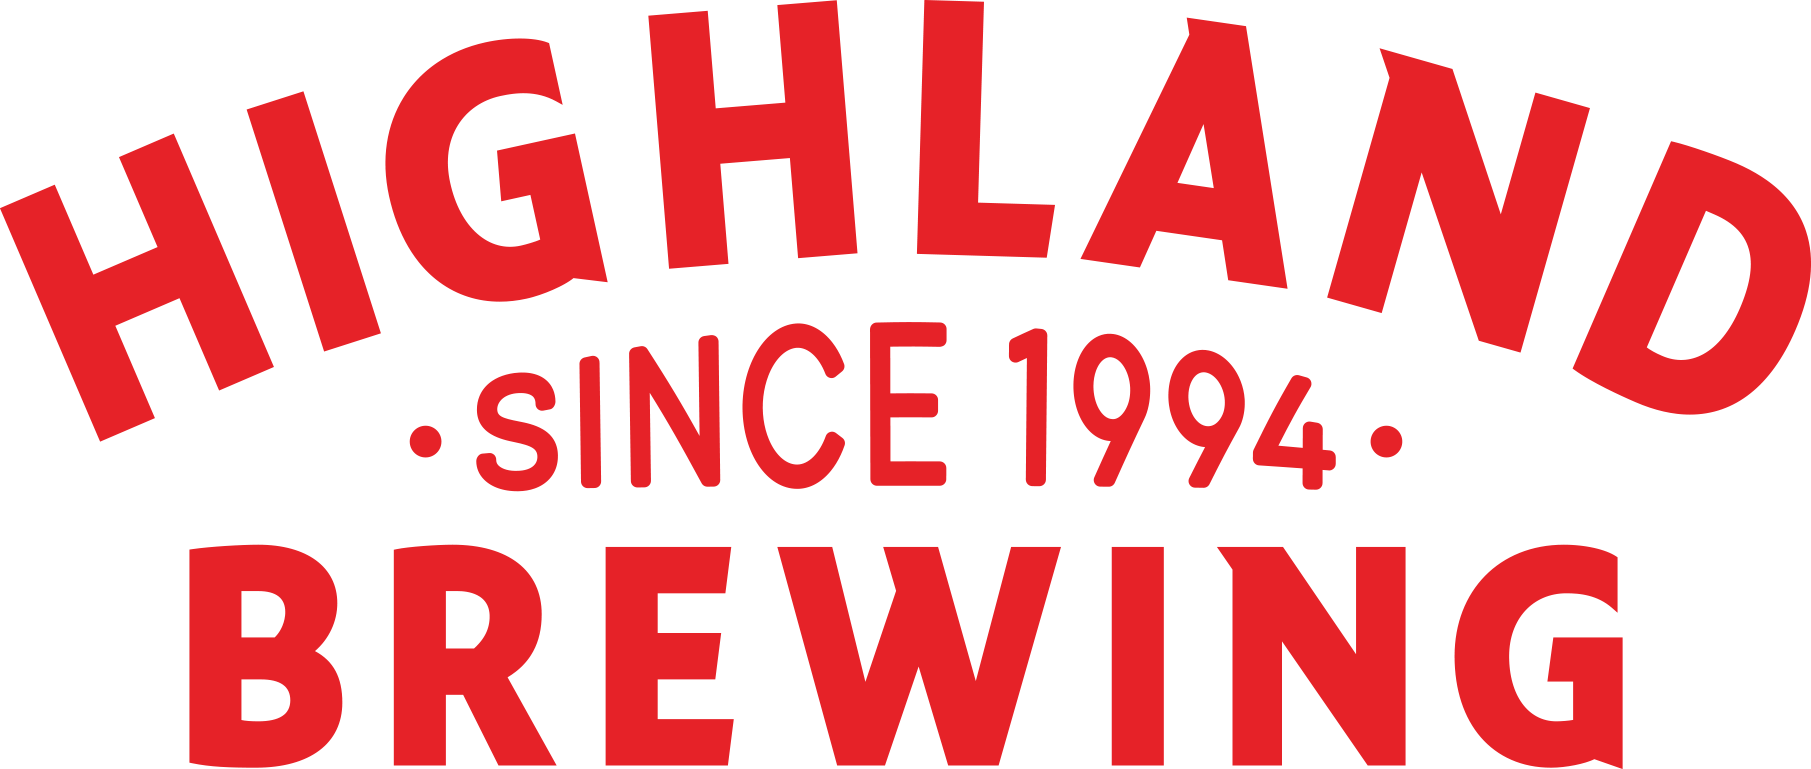 Highland-Brewing-Logo-Red